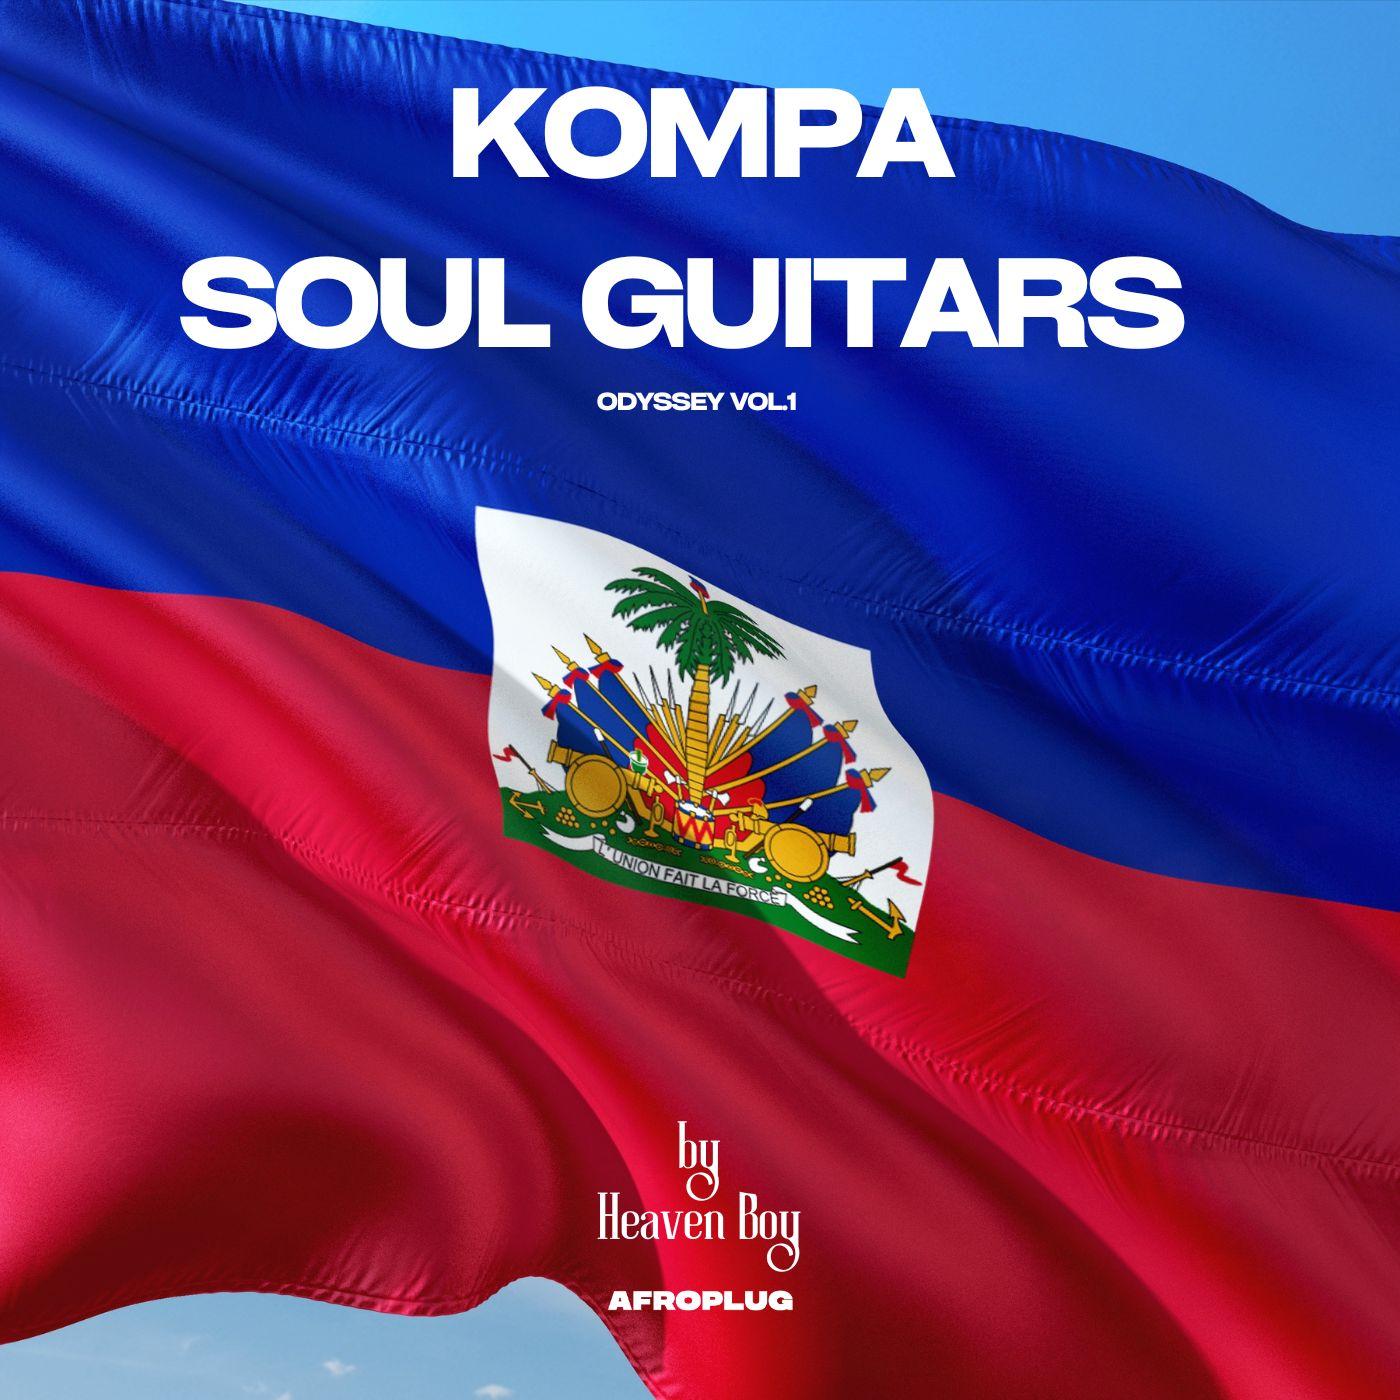 130+ Kompa Soul Guitars - Odyssey Vol.1